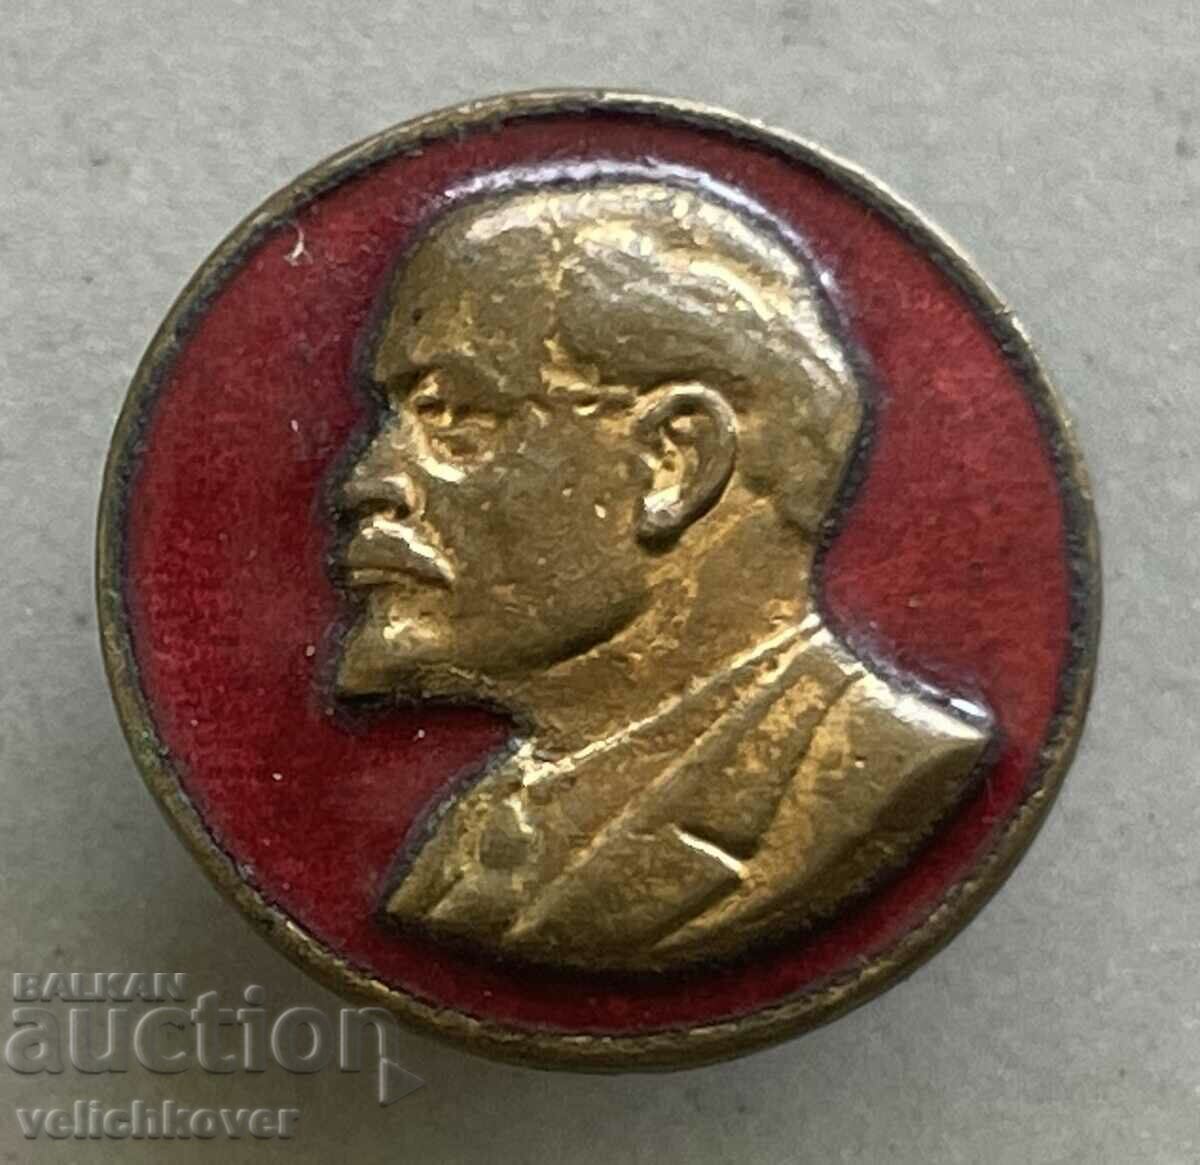 35324 USSR badge with the image of V. I. Lenin enamel 50s.